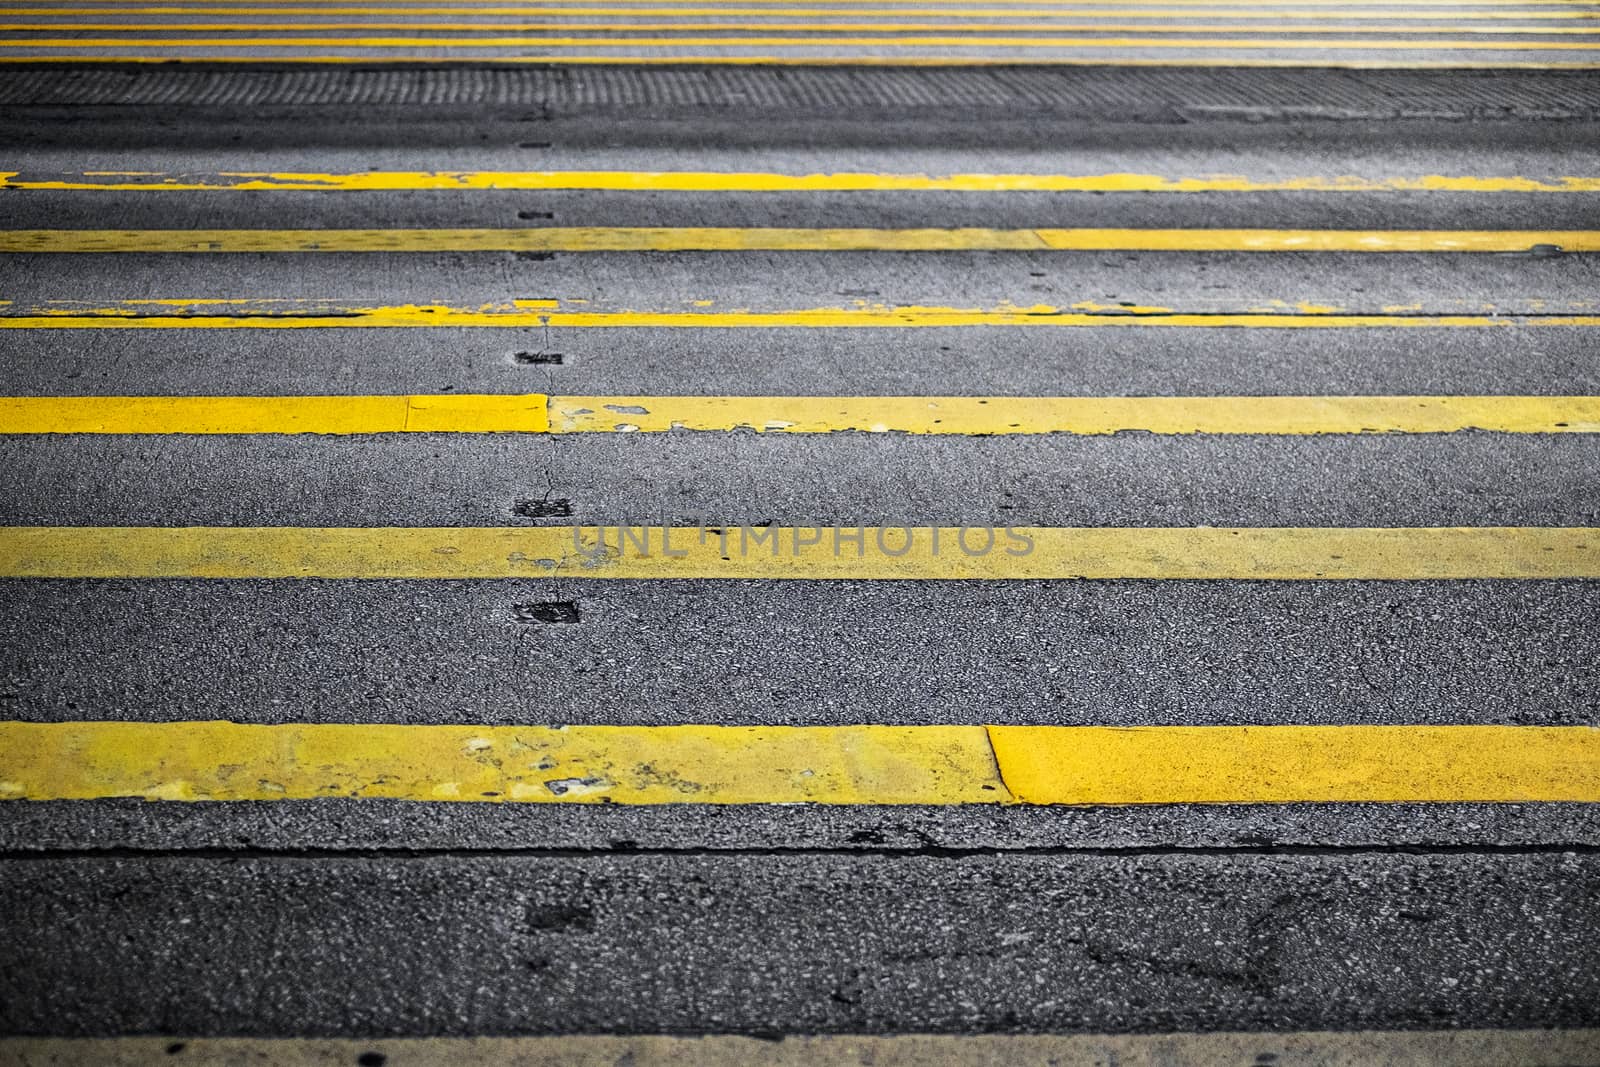 Road Marking Yellow Lines on asphalt